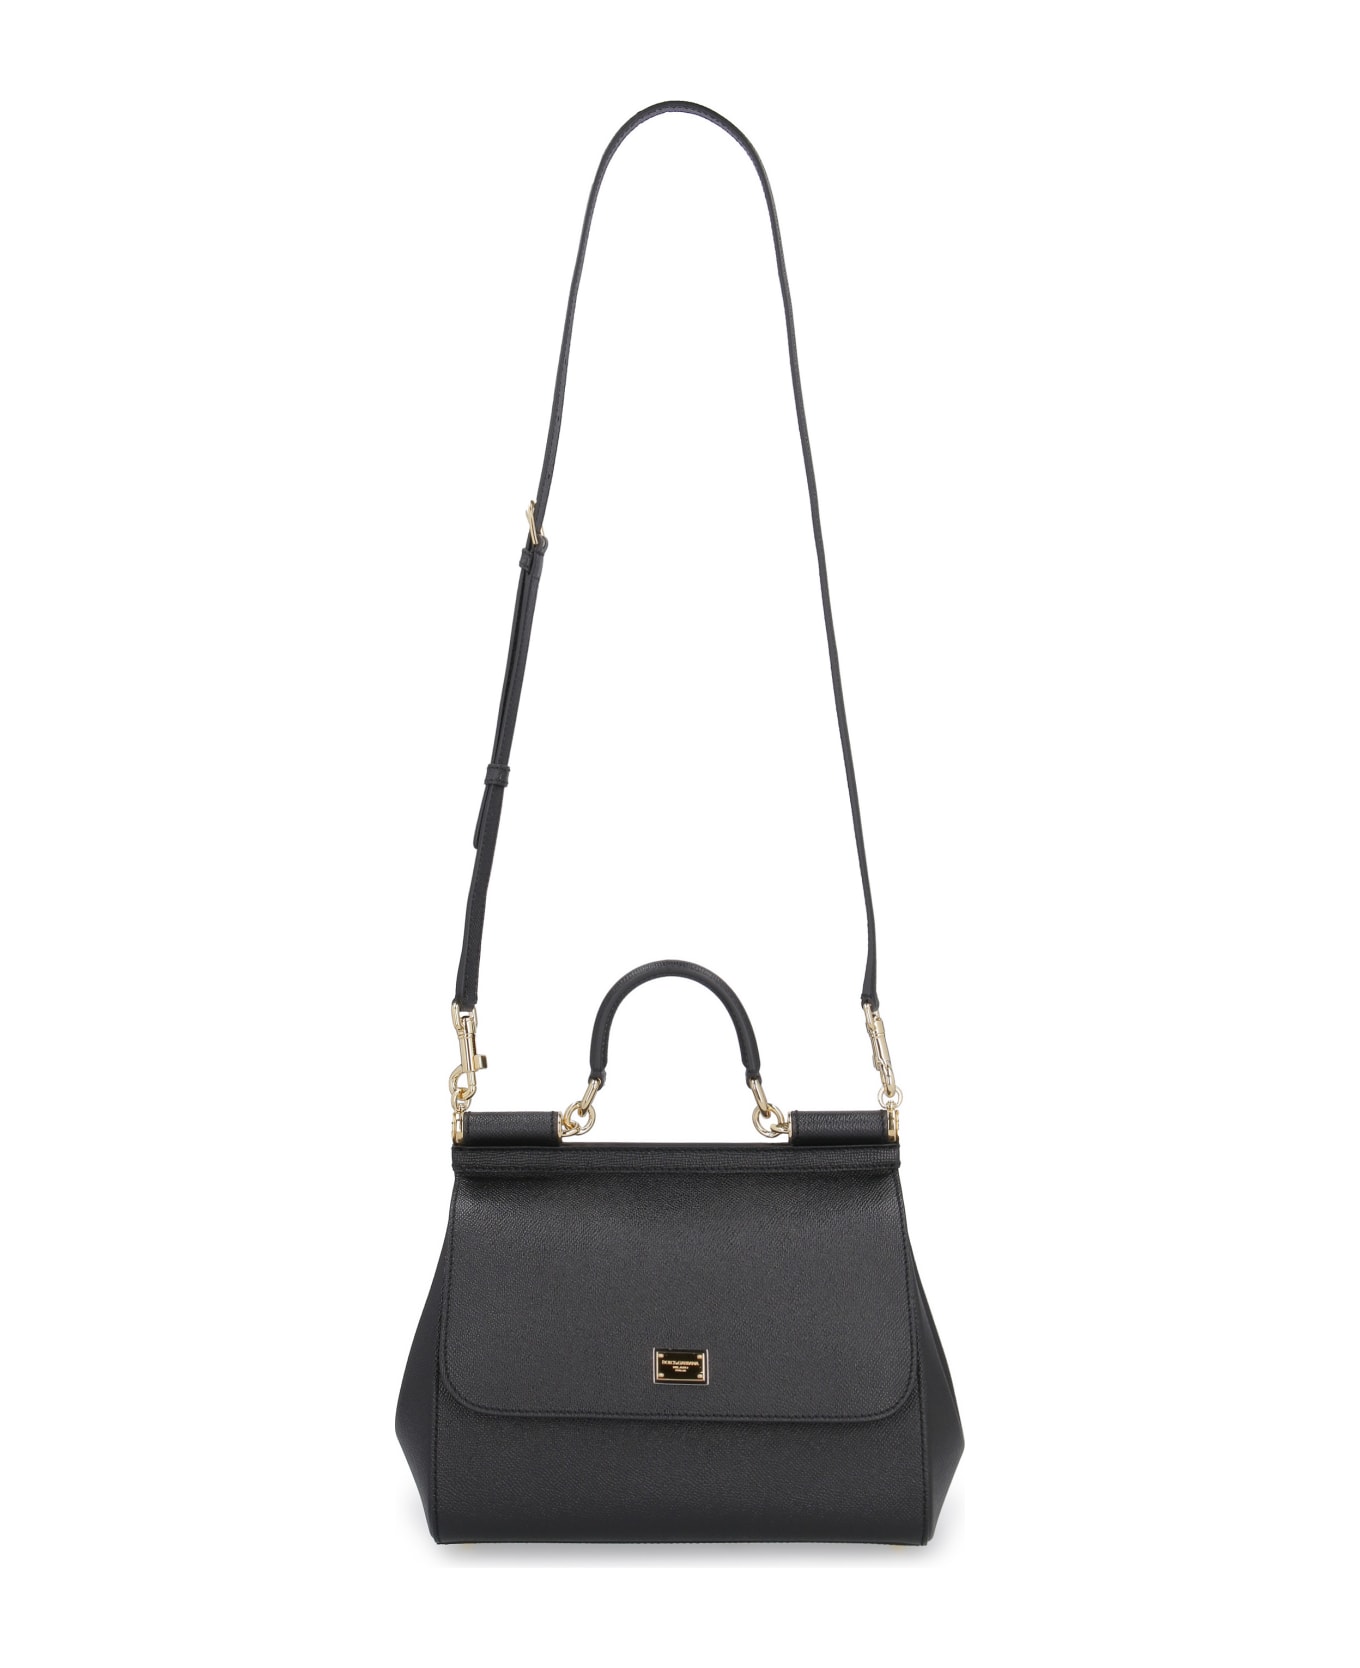 Dolce & Gabbana Sicily Leather Handbag - black